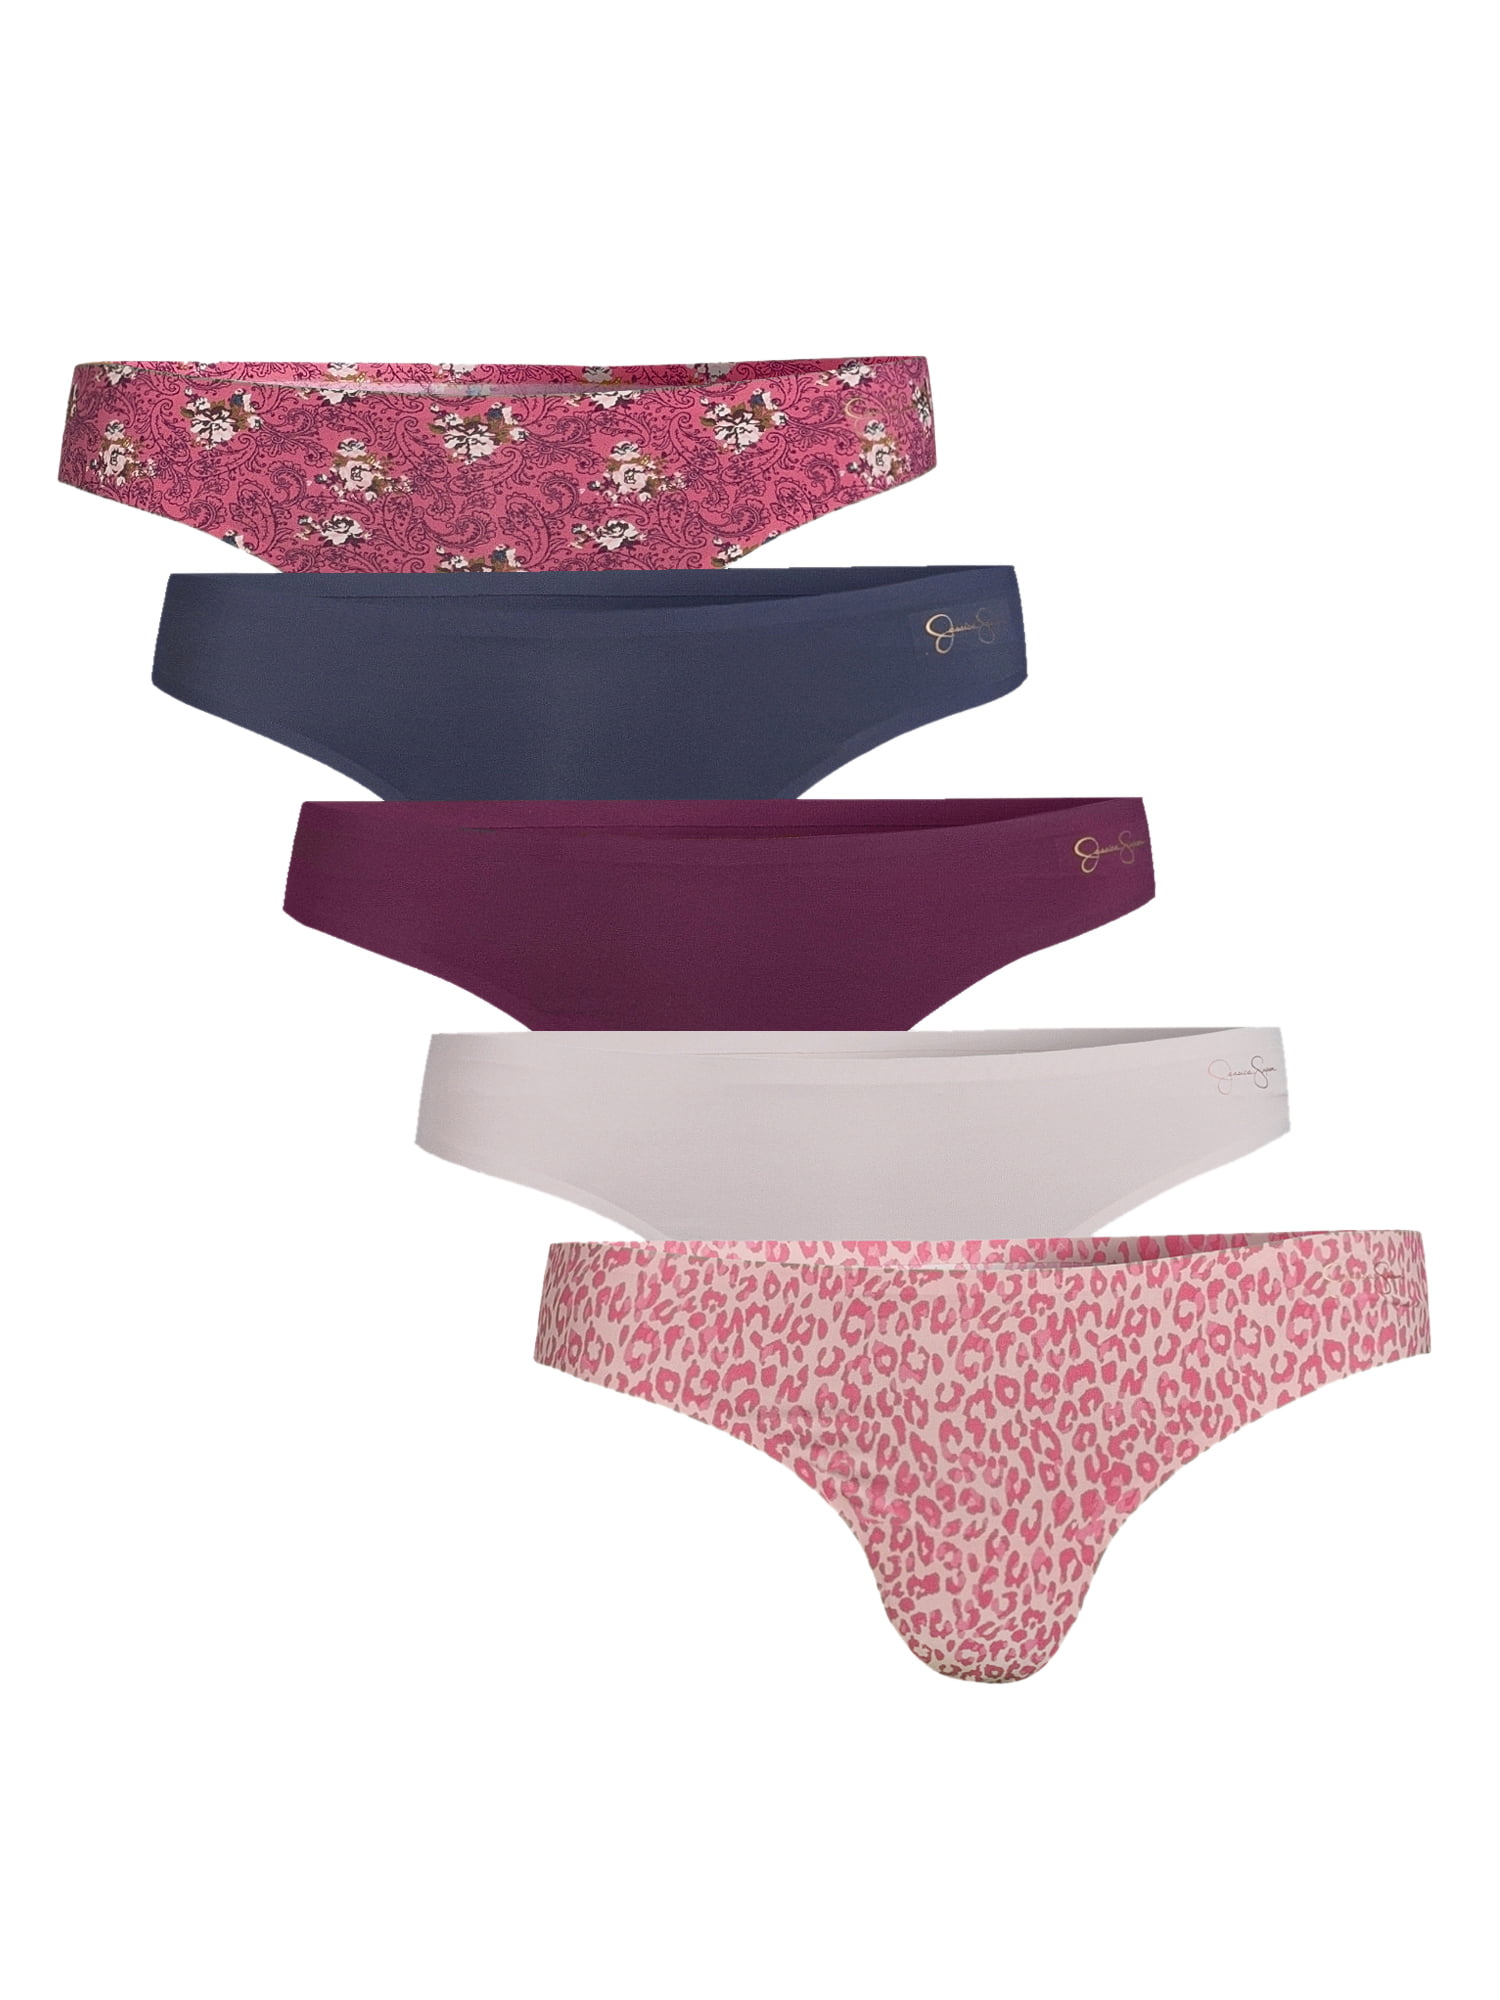 Jessica Simpson Women's Micro Bonded Thong Panties, 5-Pack